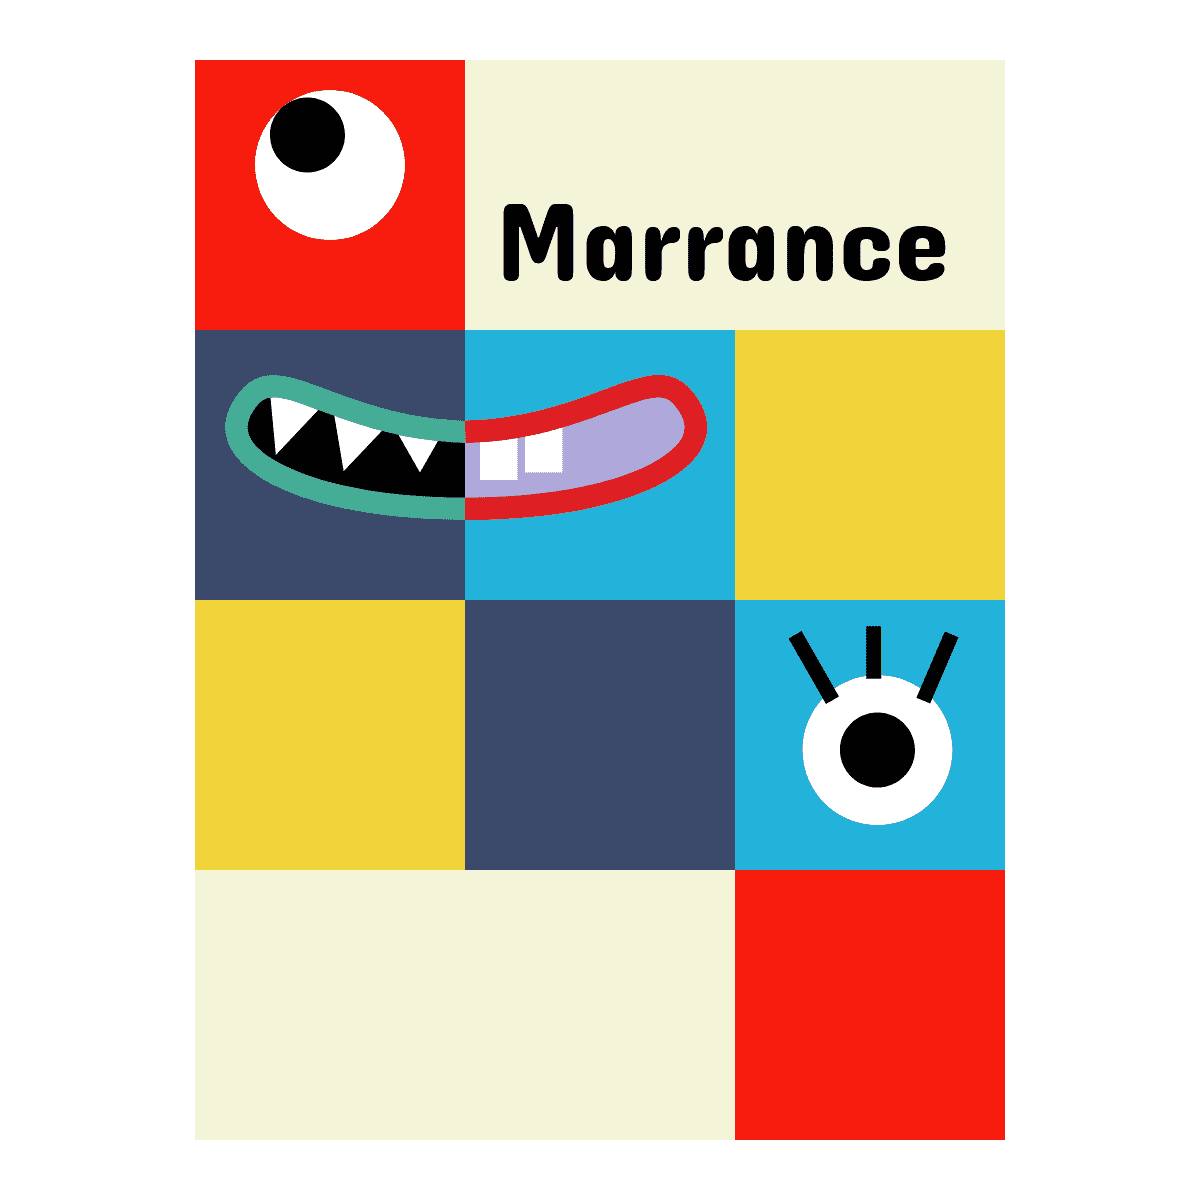 Marrance